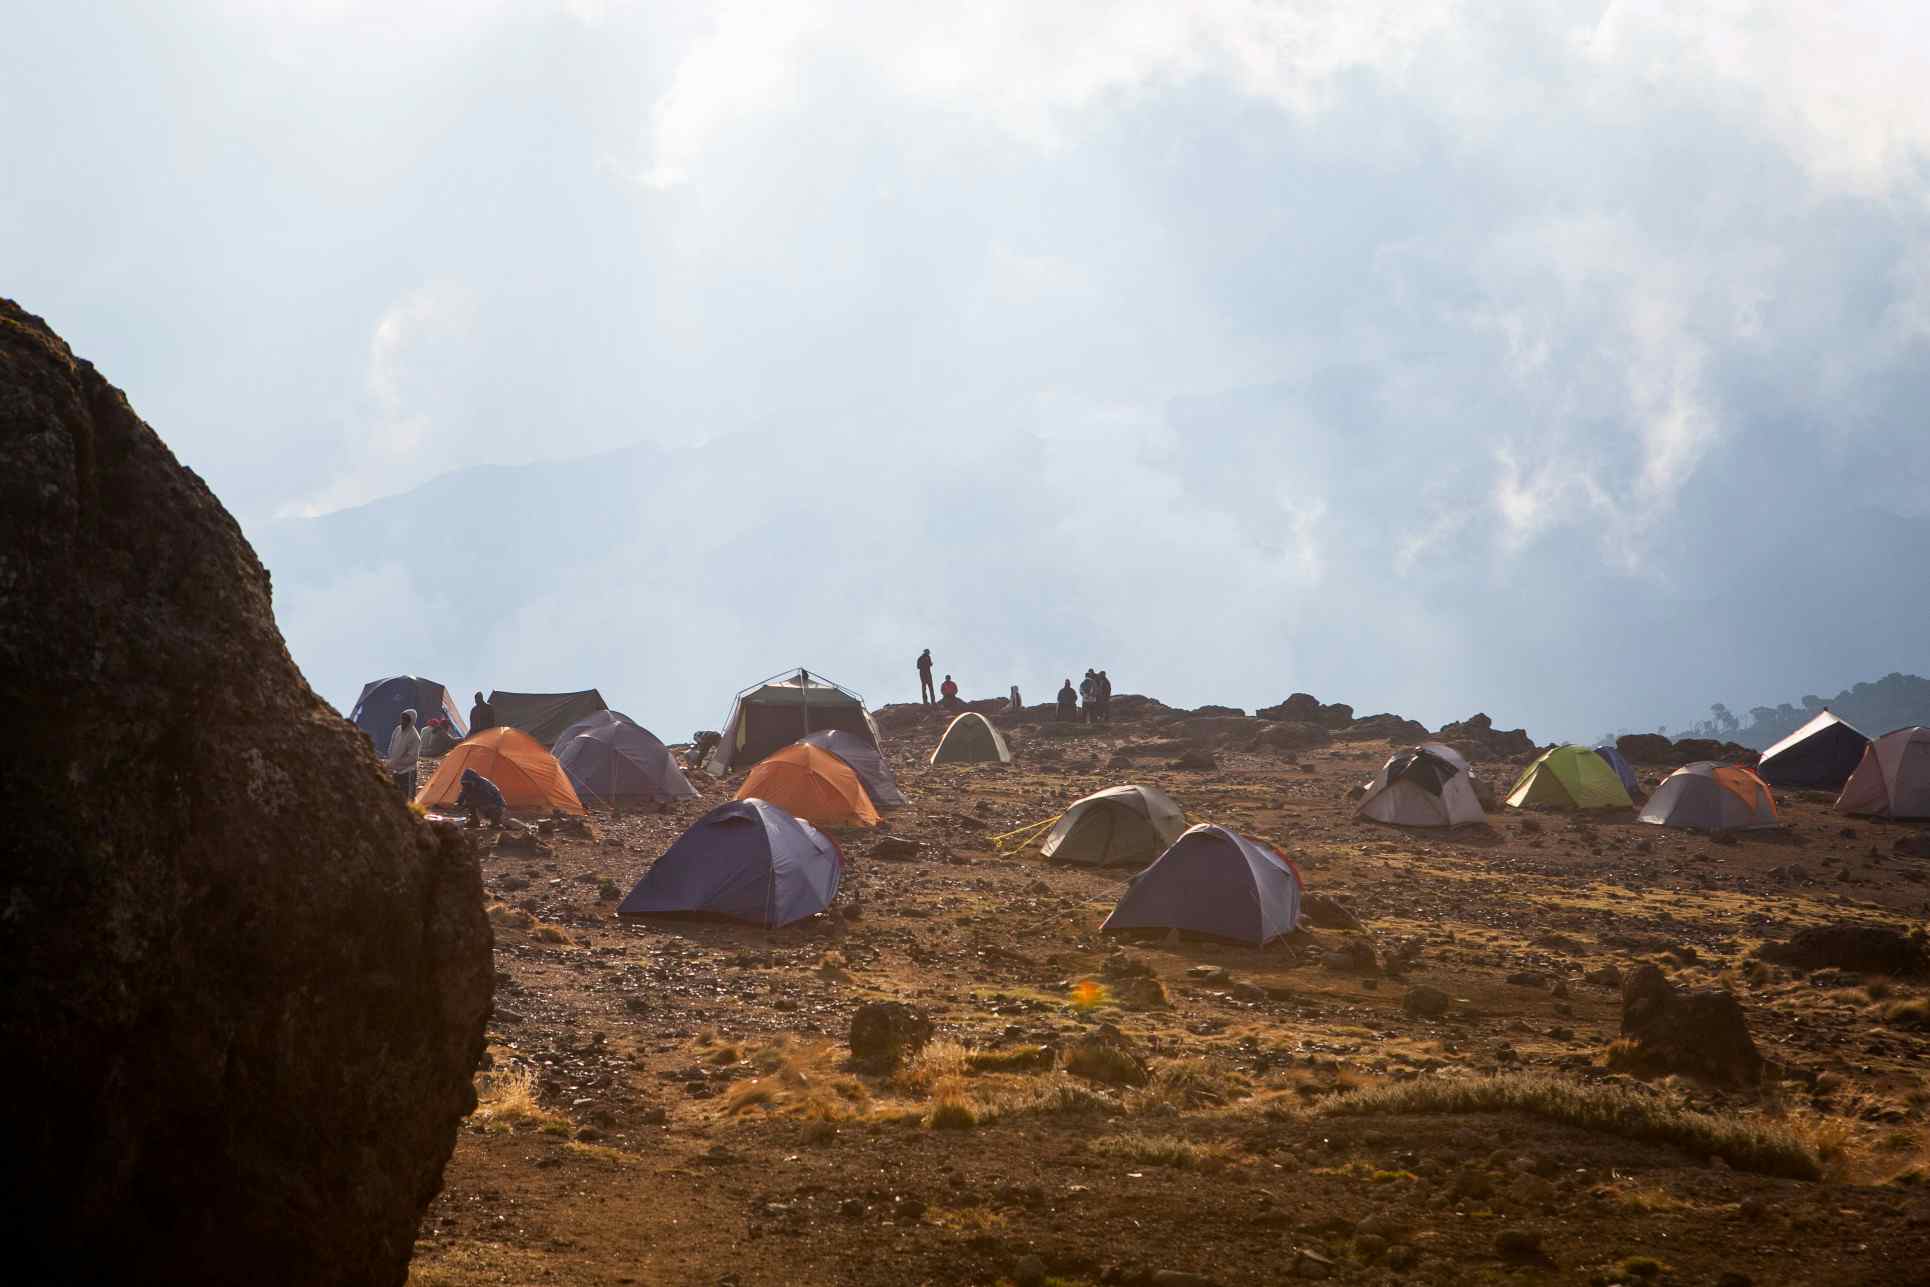 Tents pitched at Shira Camp with a cloudy backdrop on Mount Kilimanjaro, Tanzania.